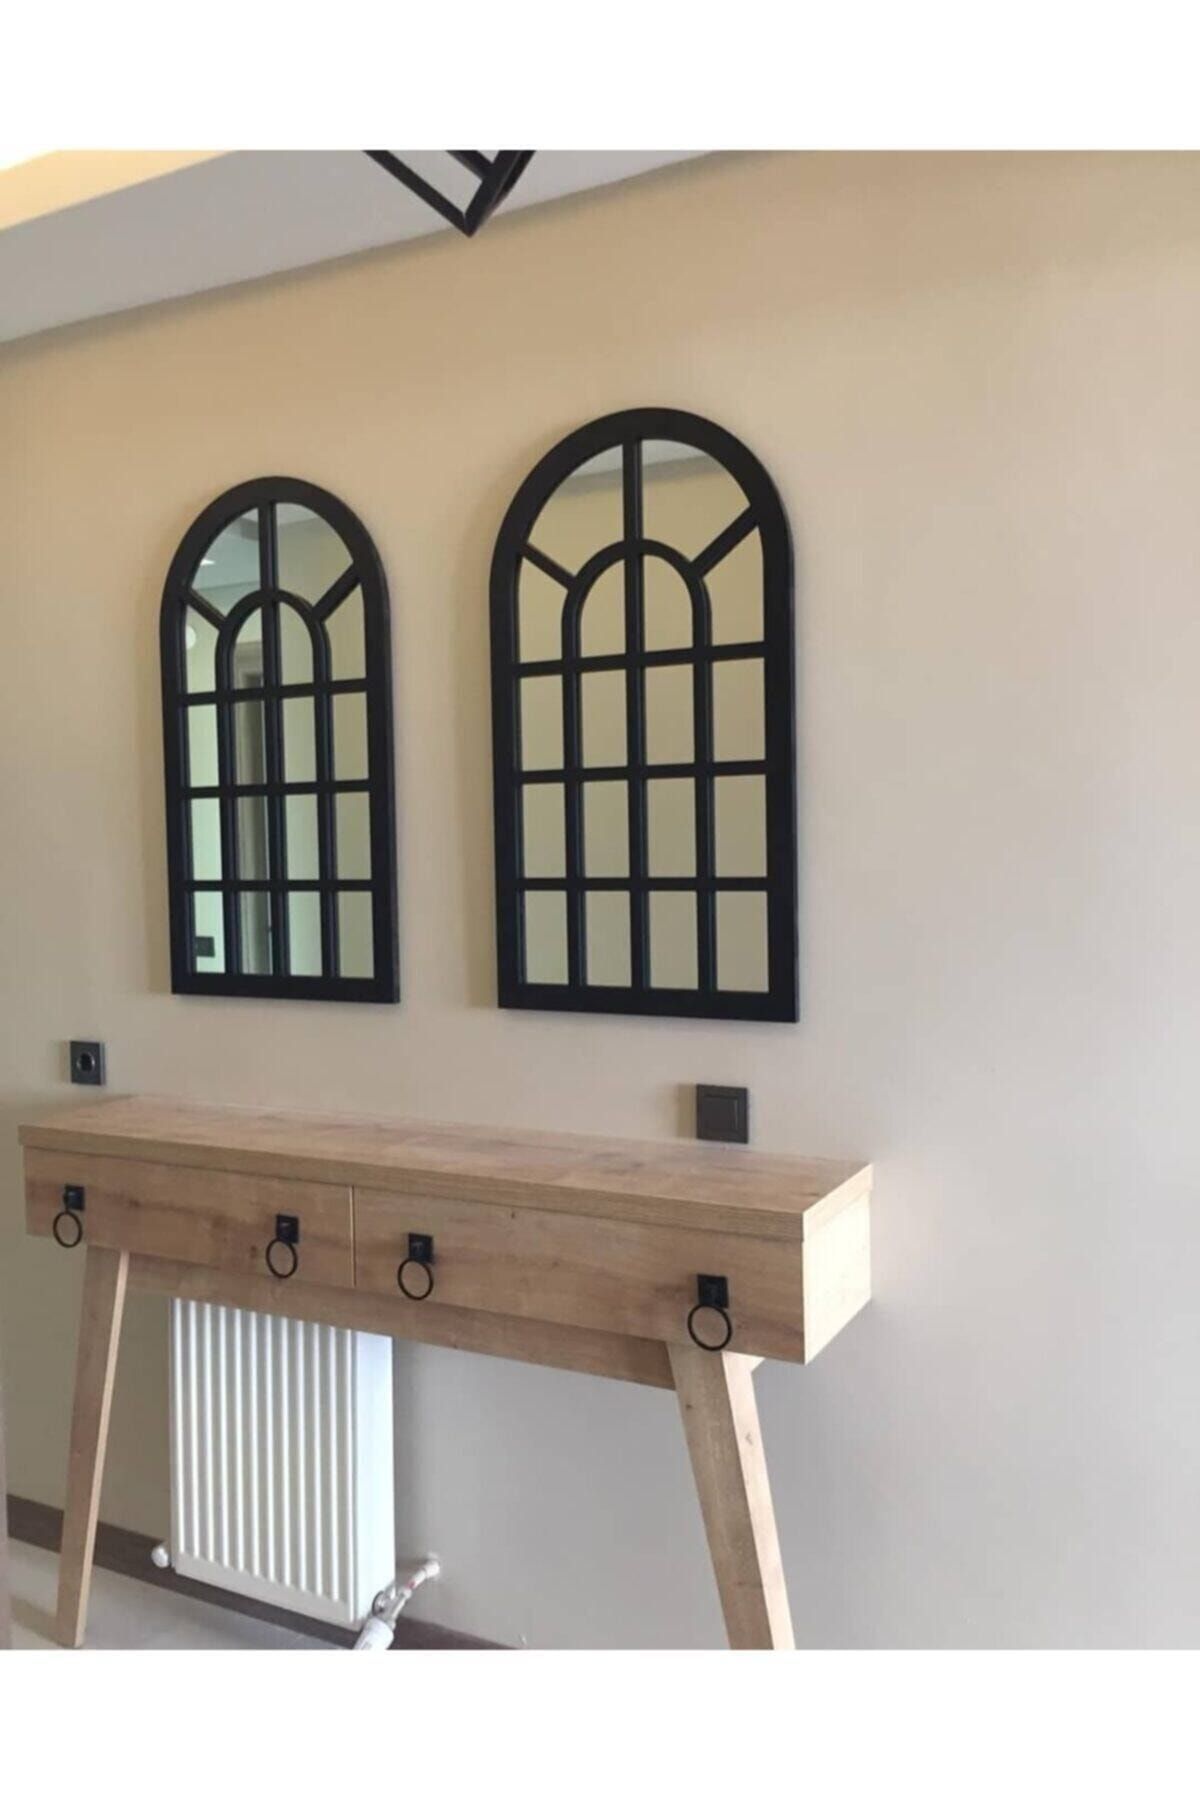 Variant Wood Dekoratif Boyalı Pencere Ayna